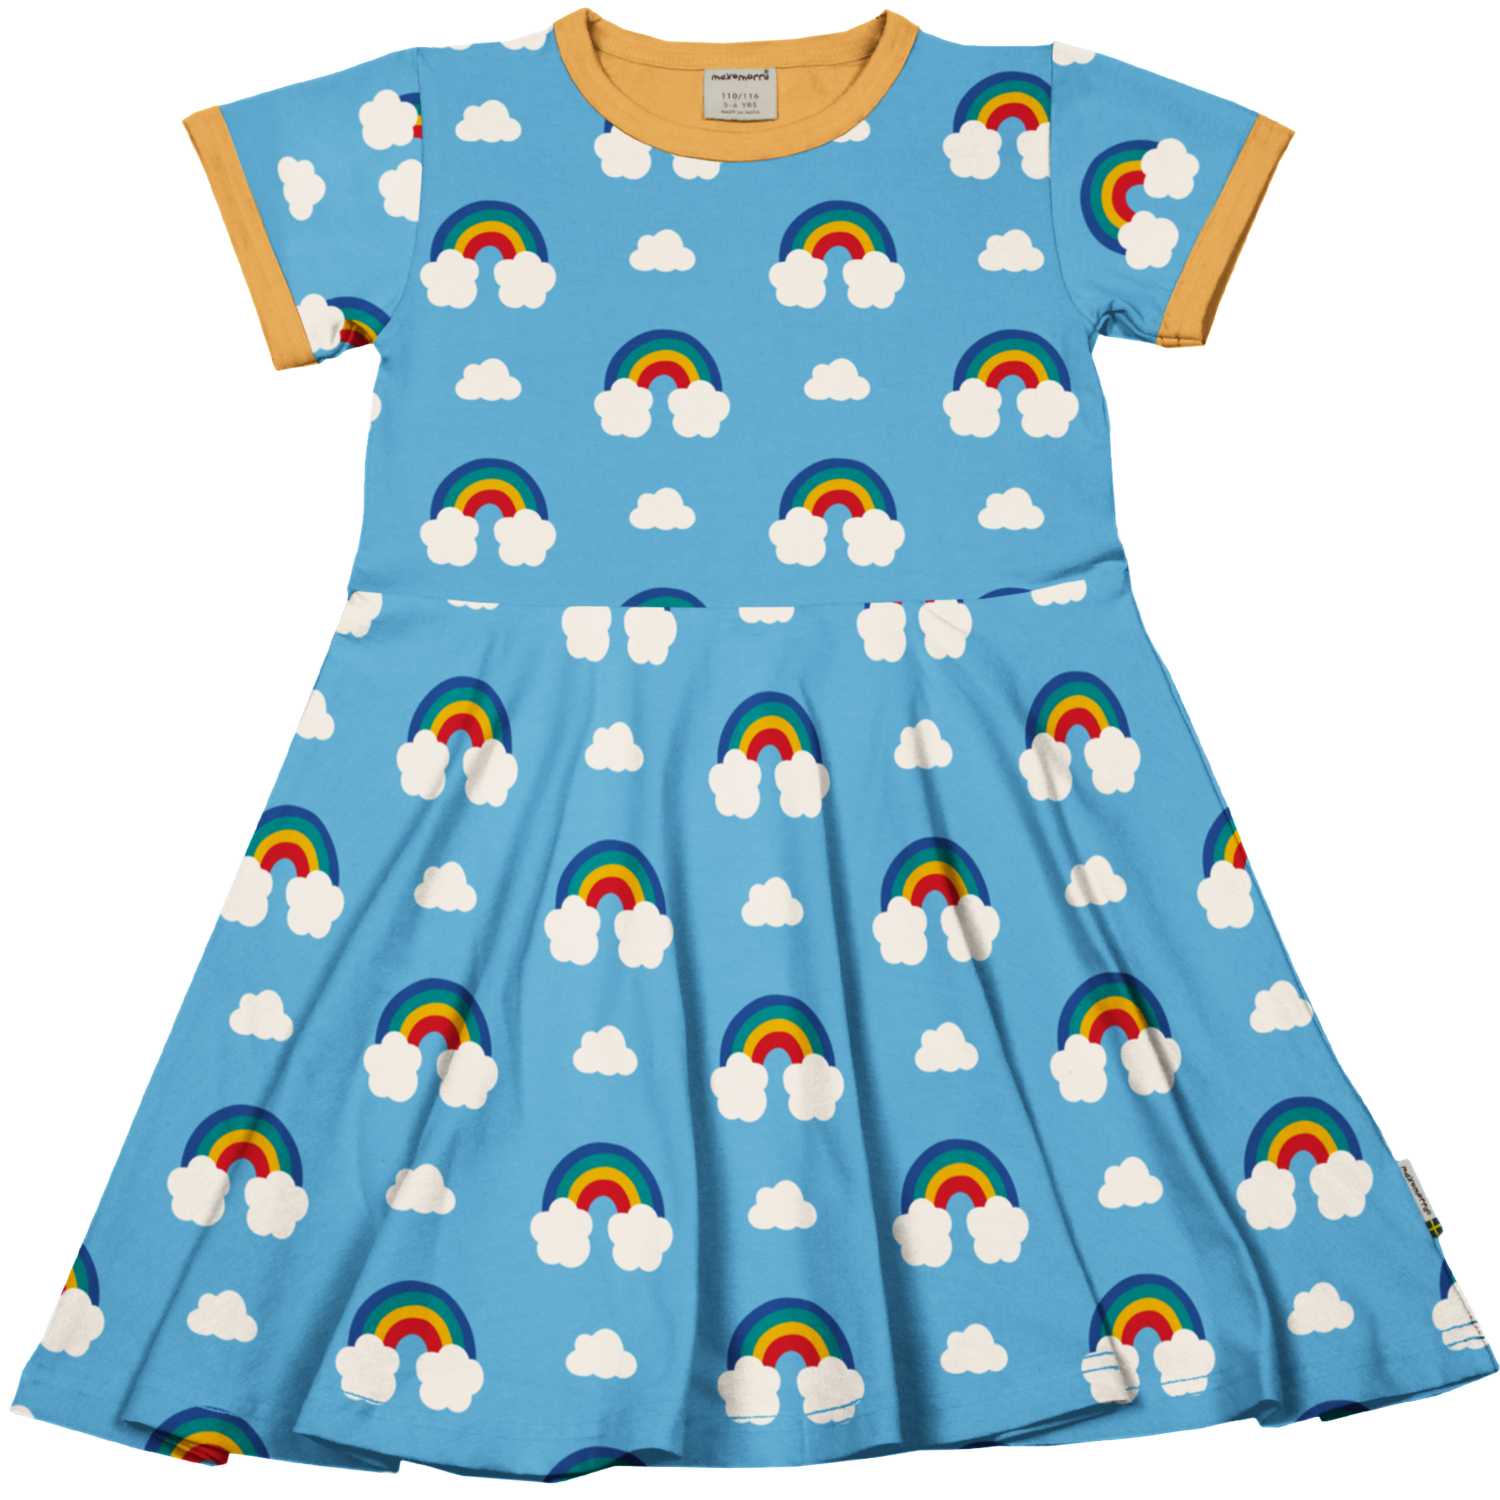 Maxomorra Rainbow Circle Dress Ss24 Clothing 3-4YRS / Blue,5-6YRS / Blue,7-8YRS / Blue